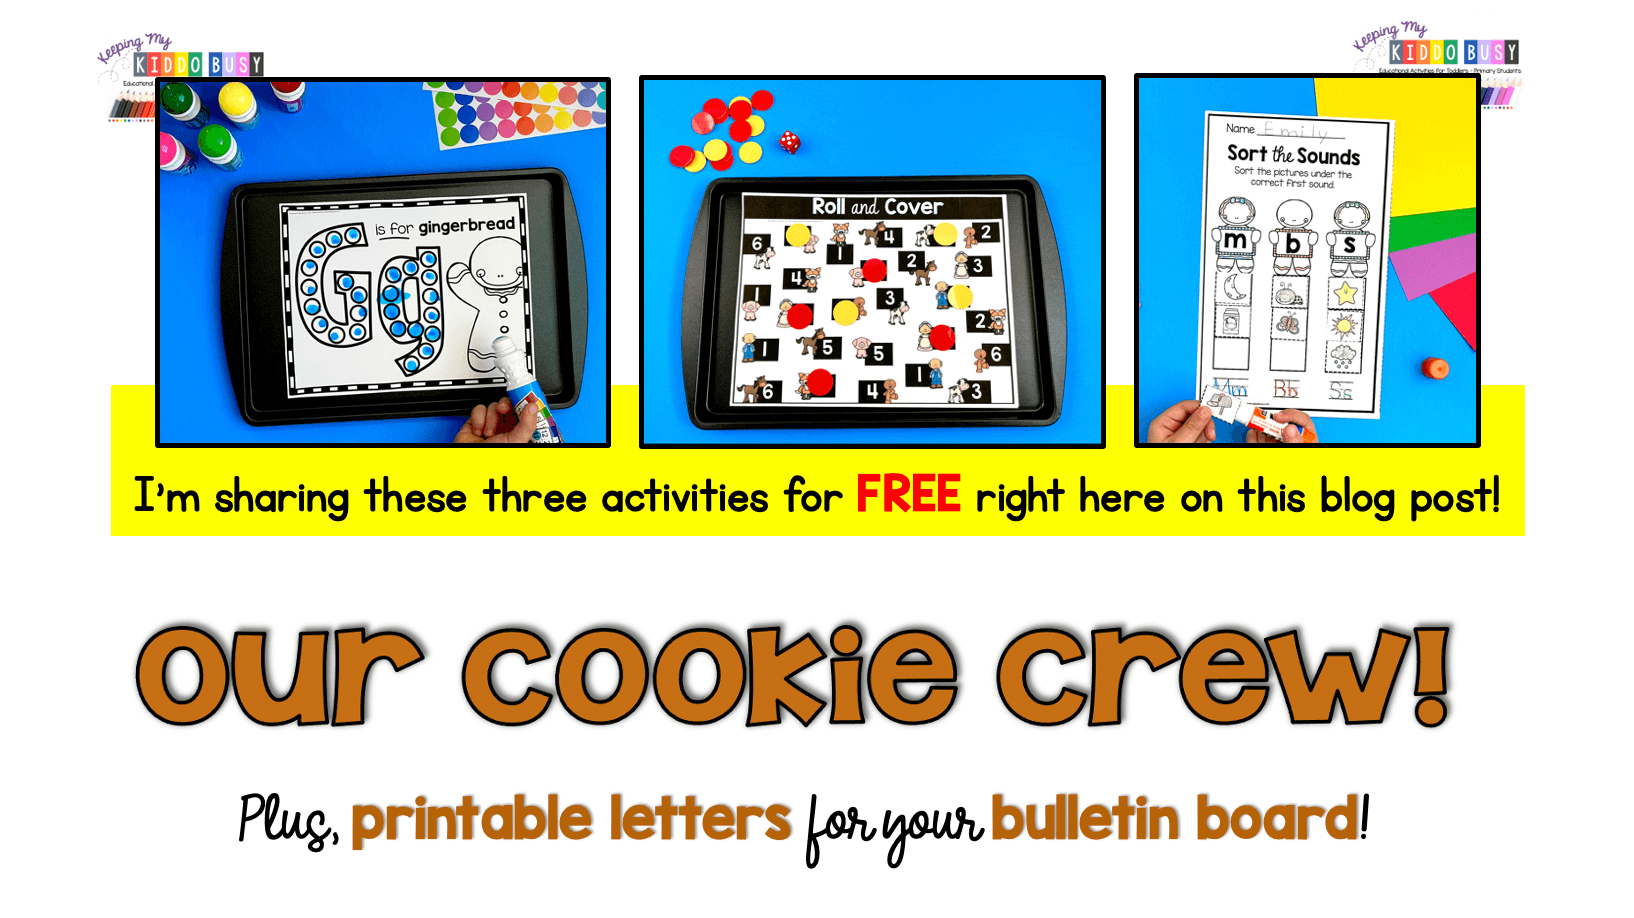 23 Free Printable Bingo Games - Crafting Cheerfully